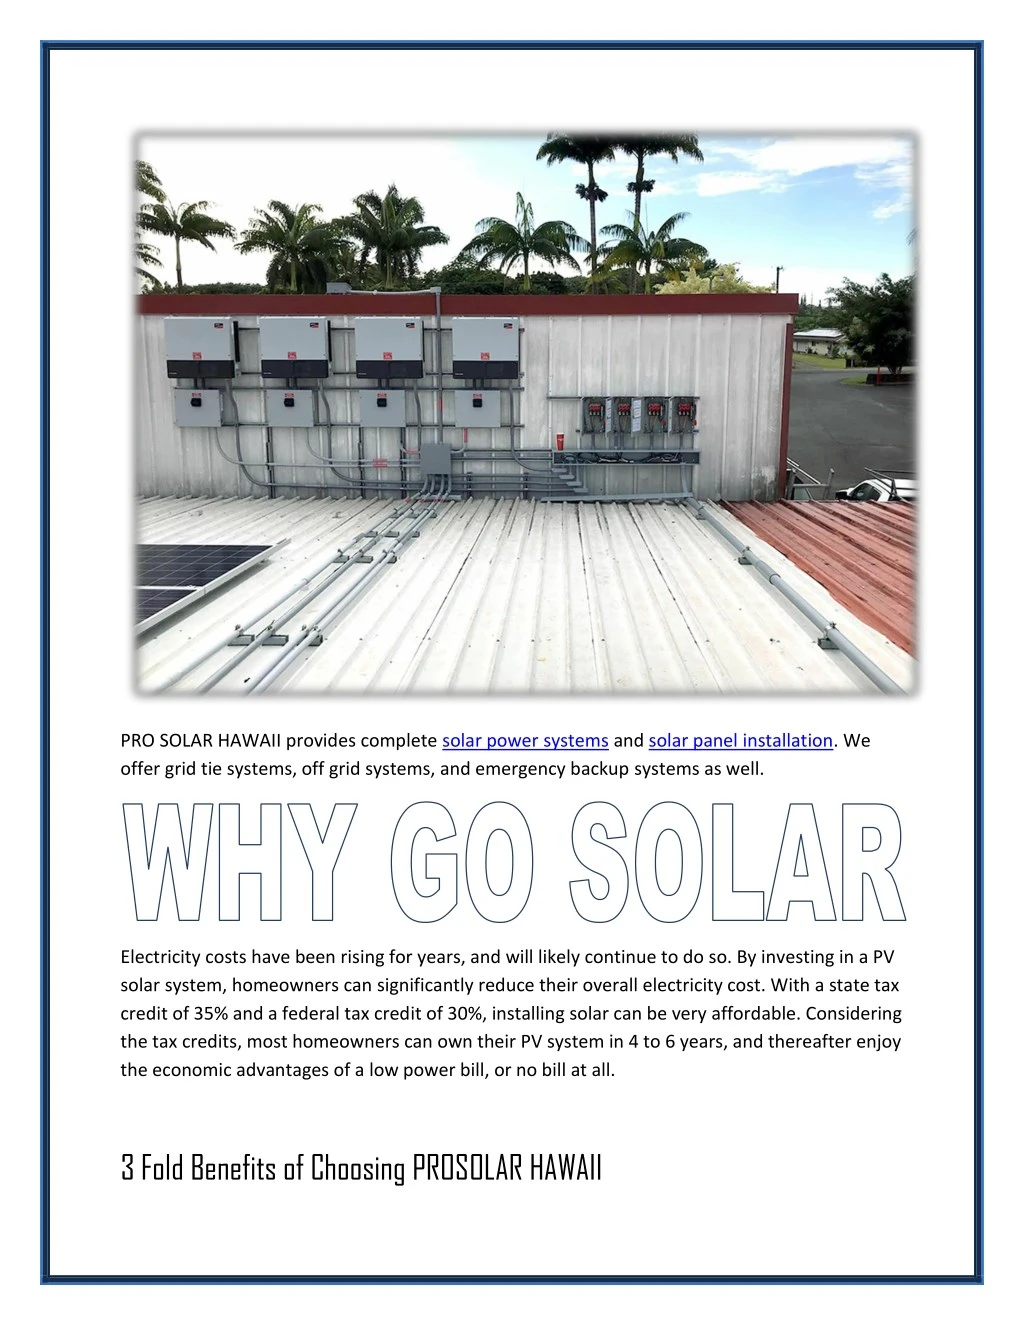 pro solar hawaii provides complete solar power